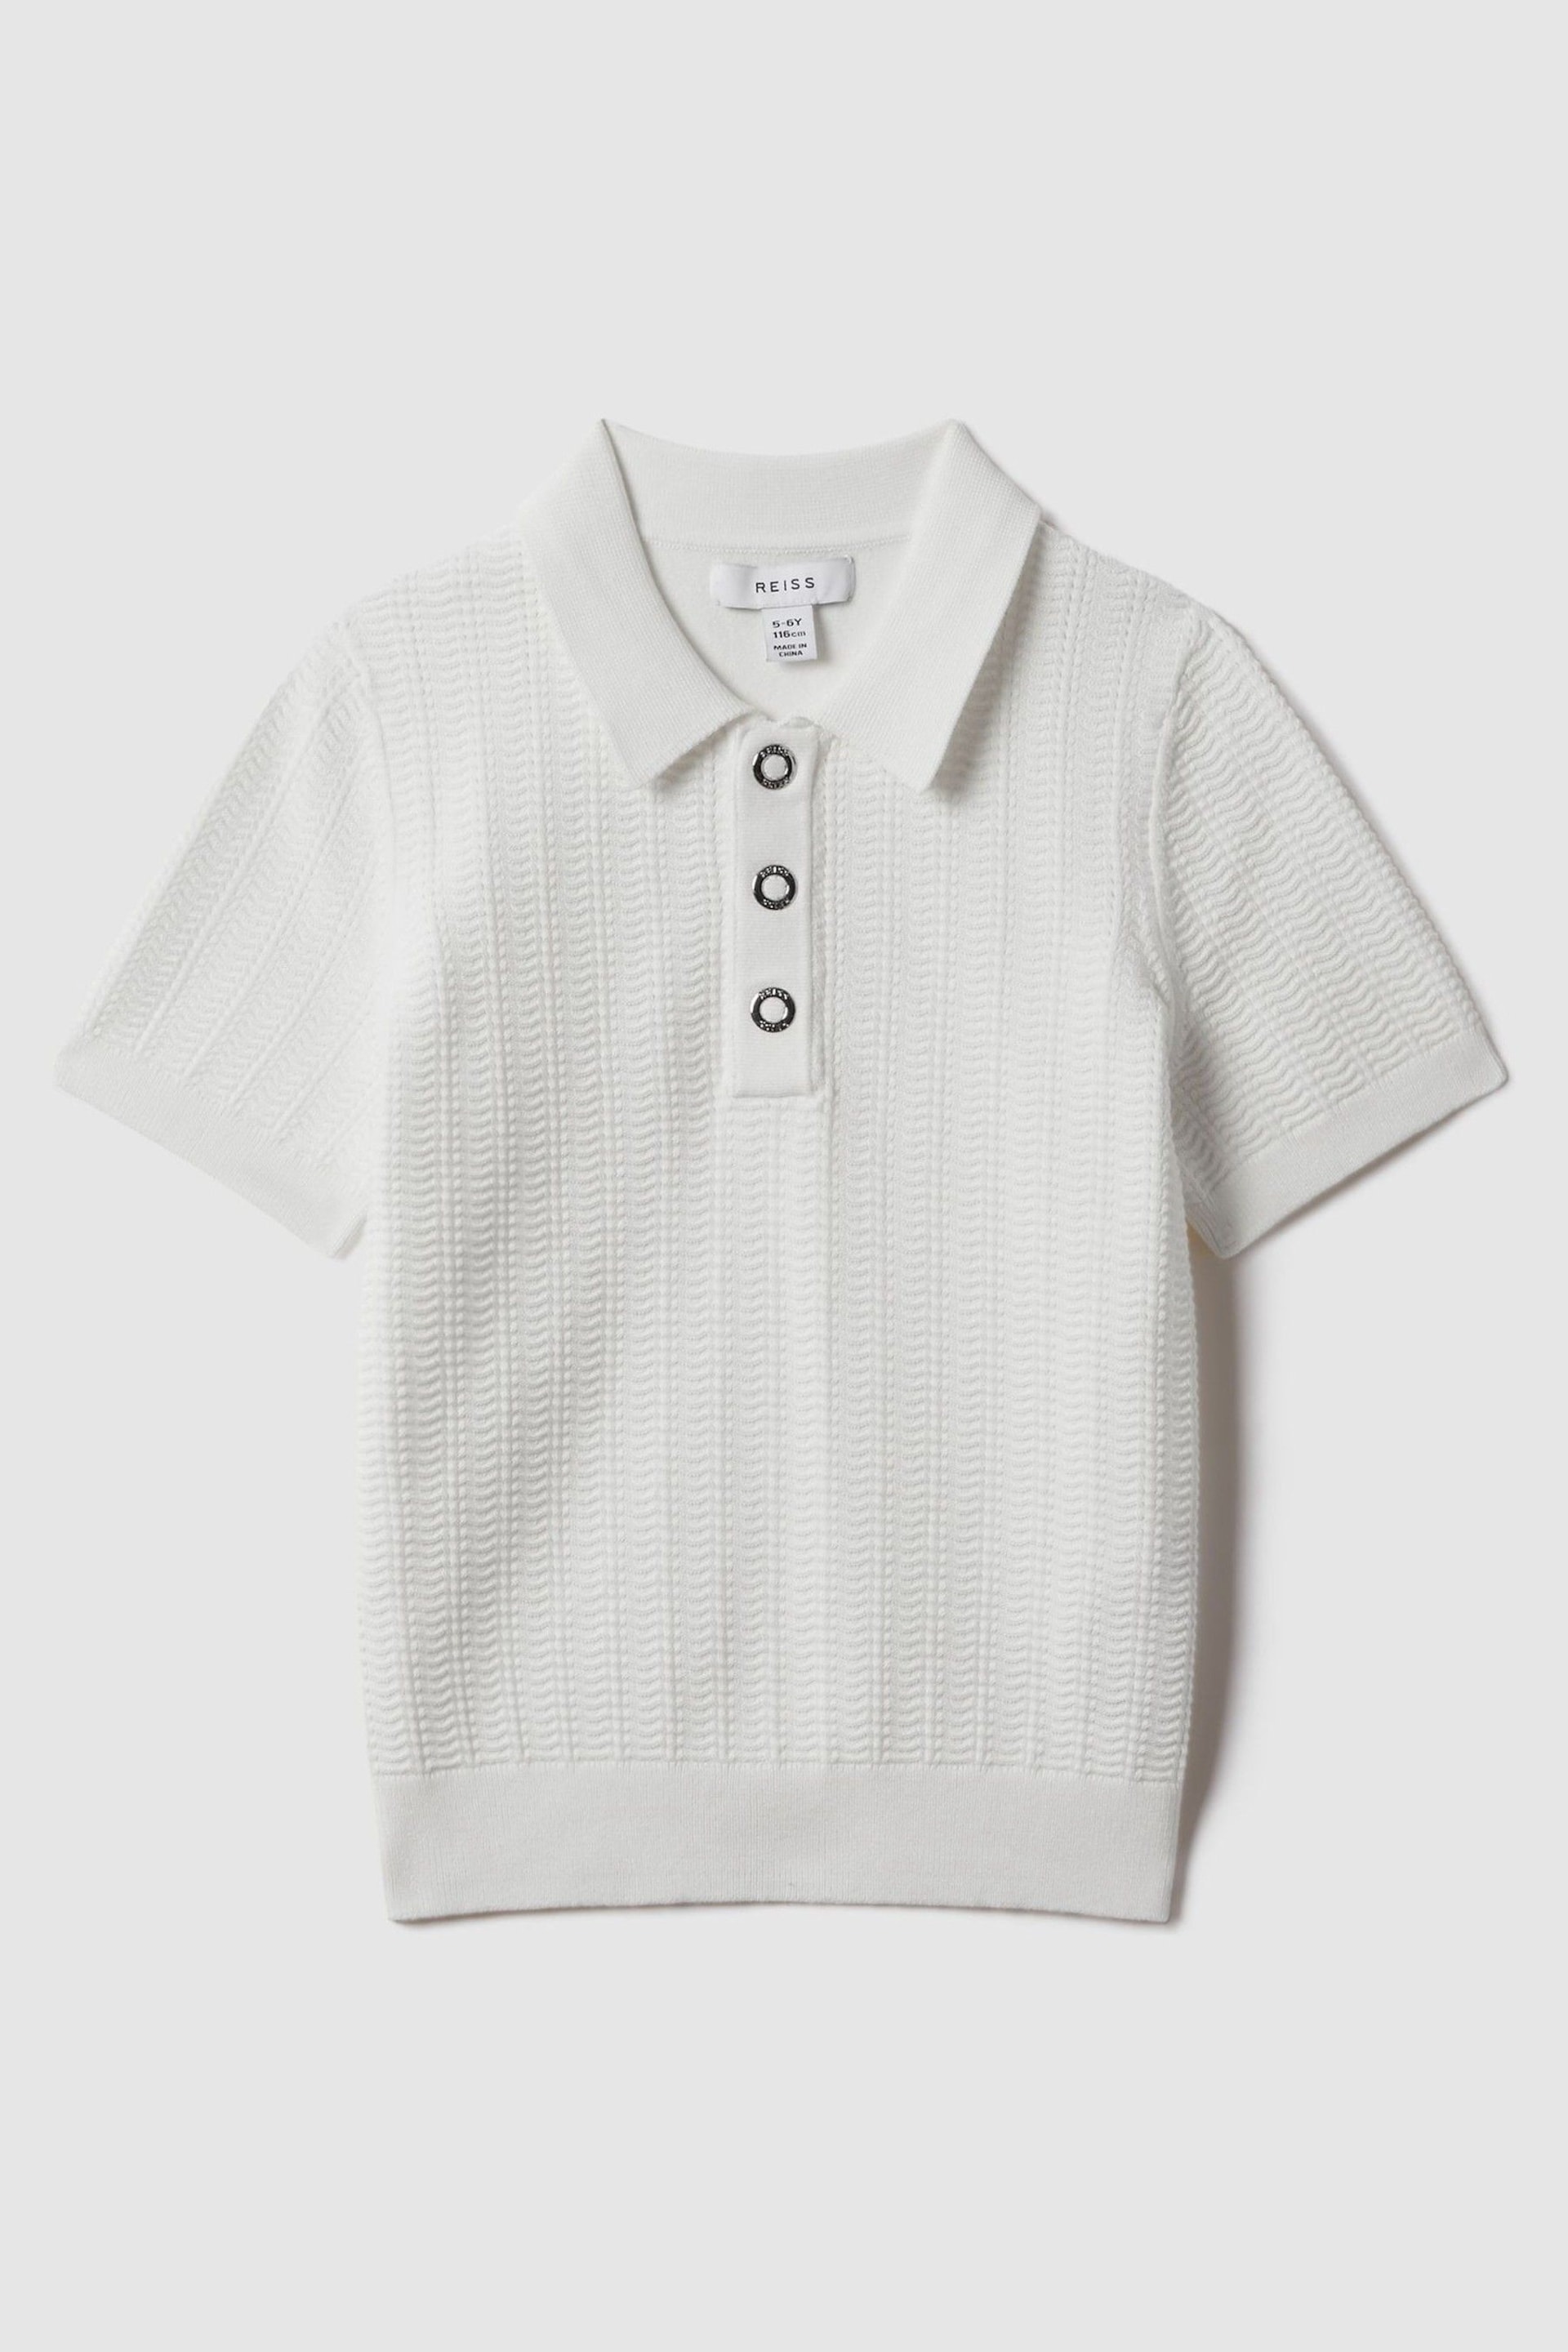 Reiss White Pascoe Teen Textured Modal Blend Polo Shirt - Image 1 of 3